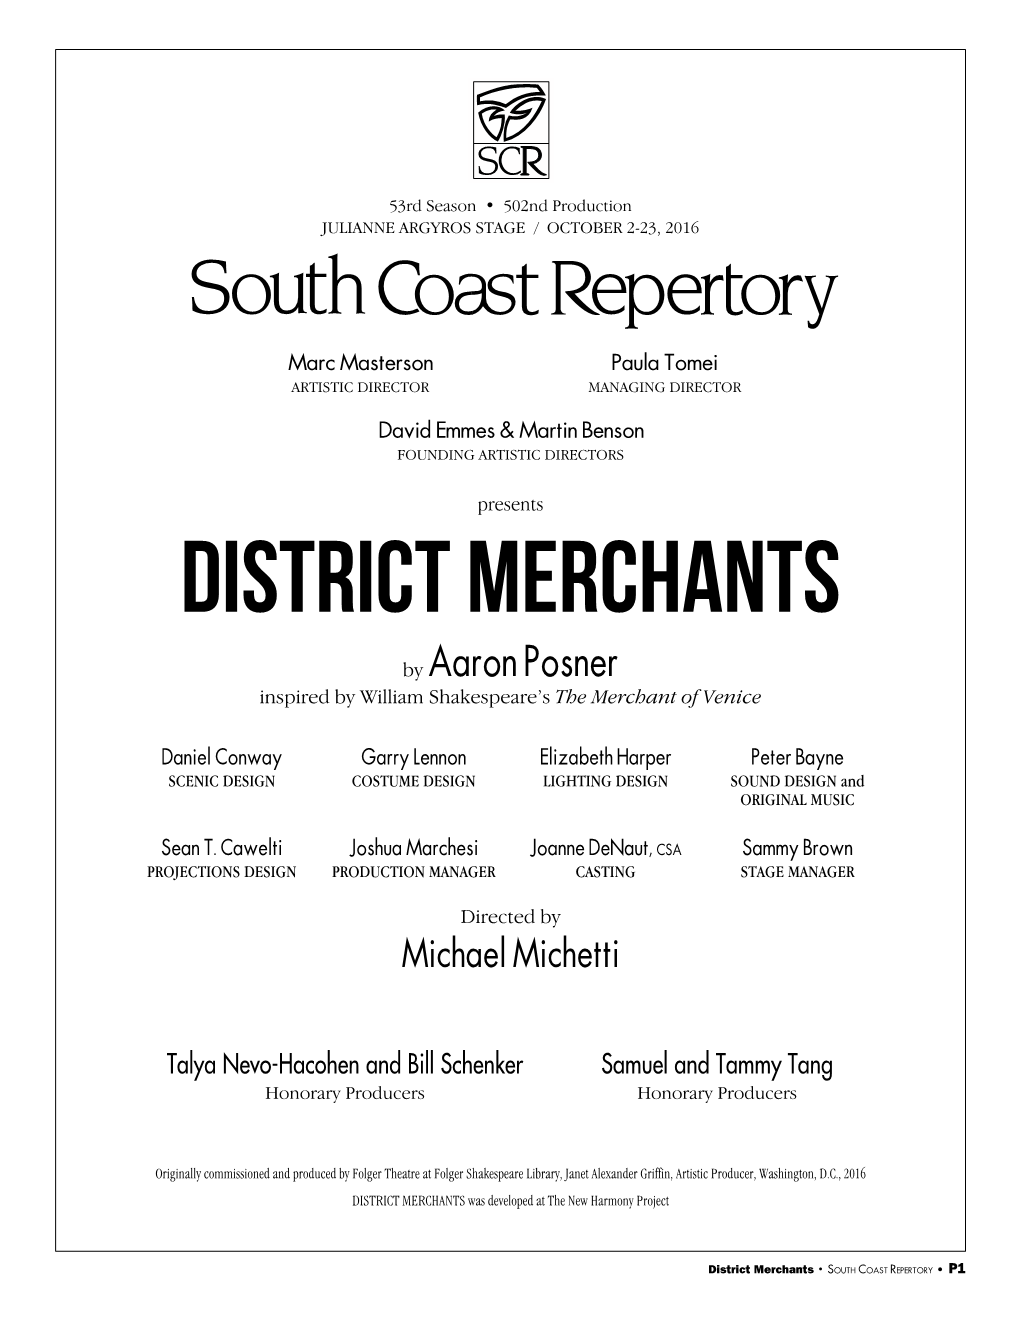 District Merchants